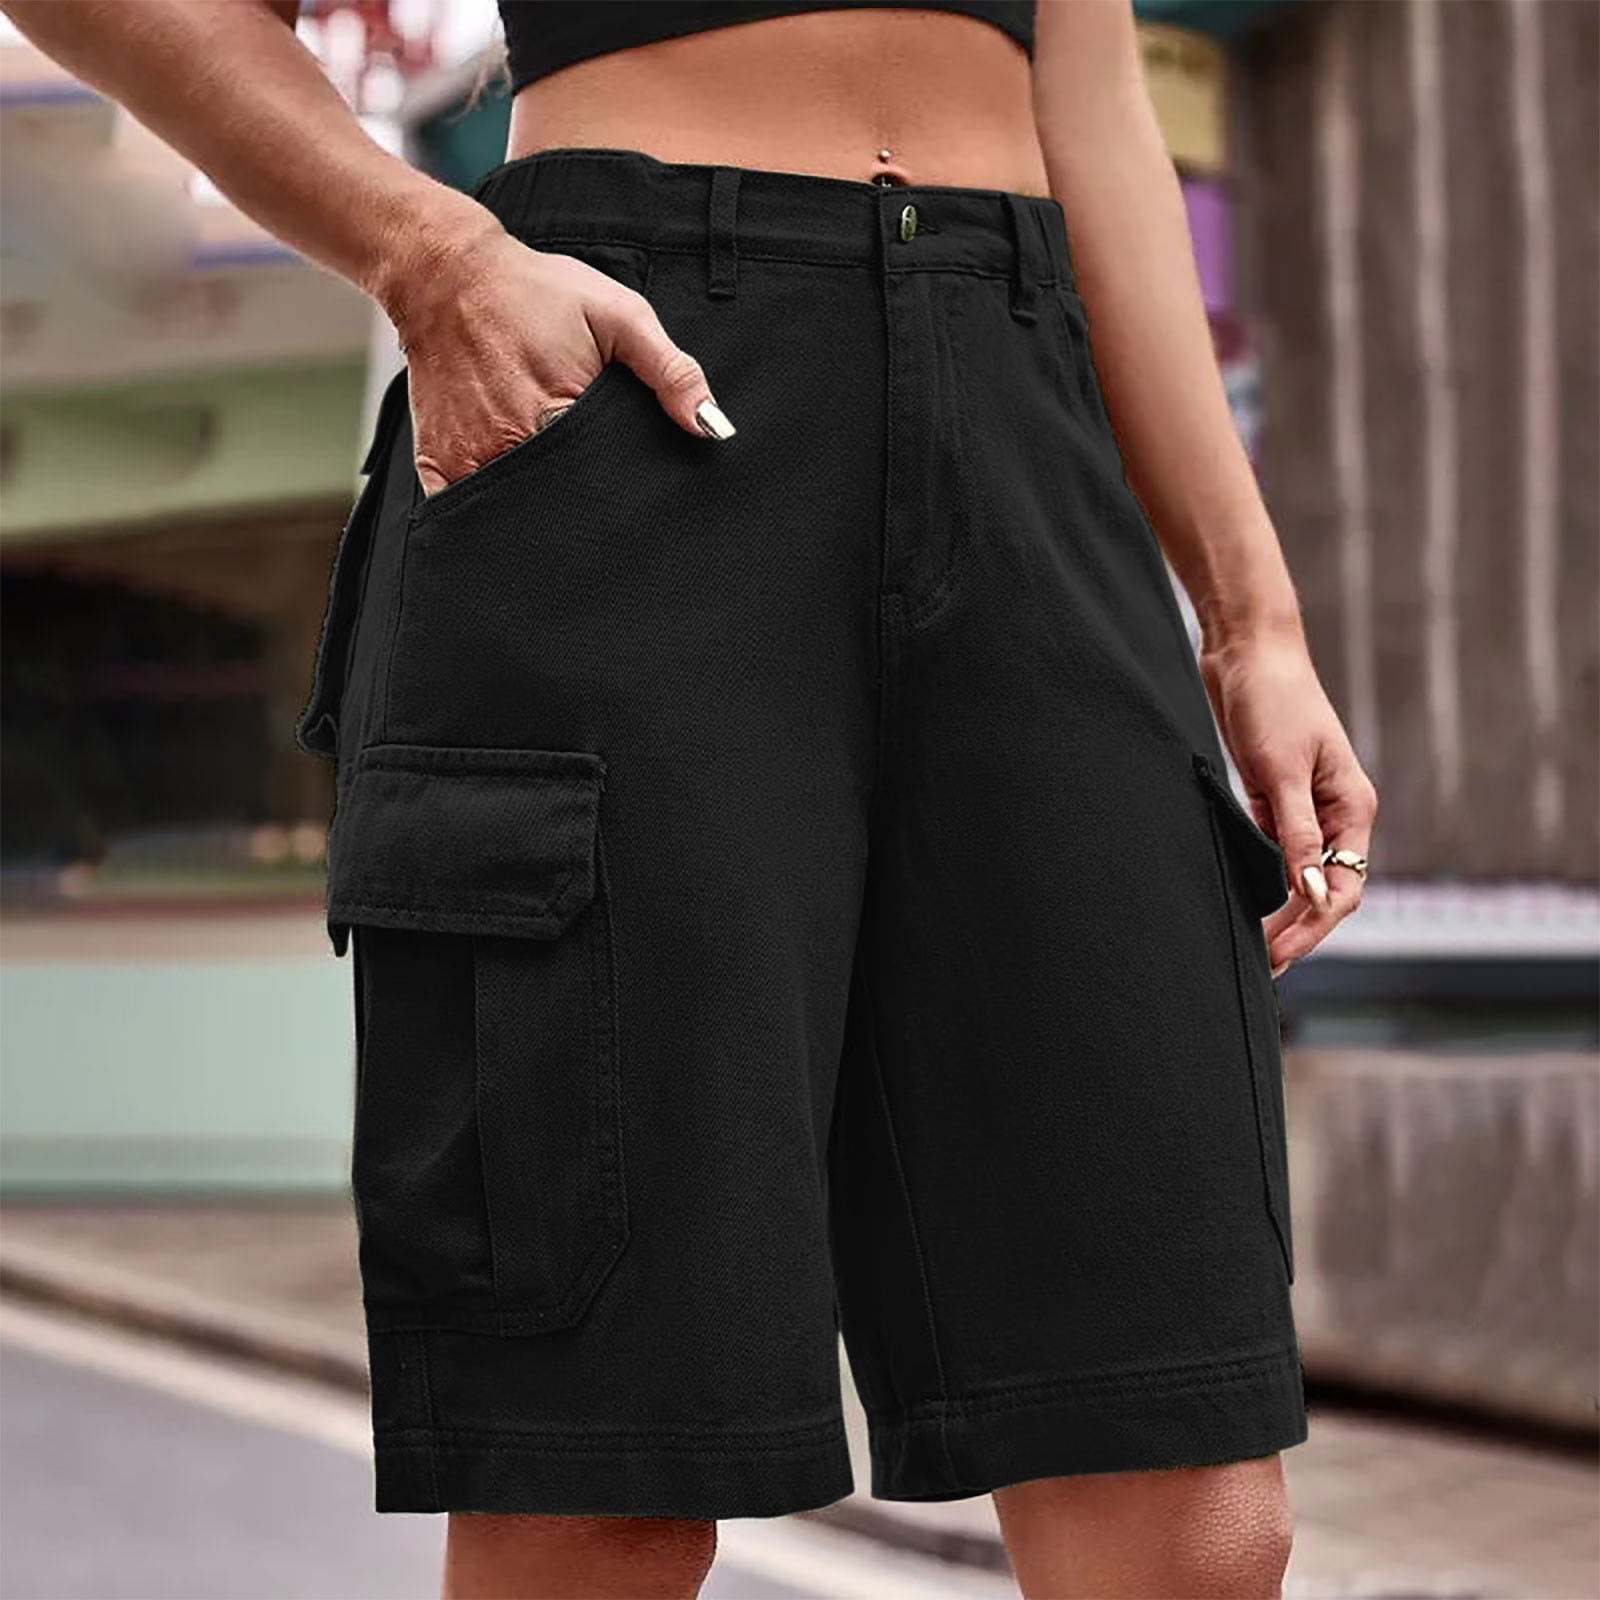 Okbop Athletic Shorts for Women Summer Straight Cylinder Shorts